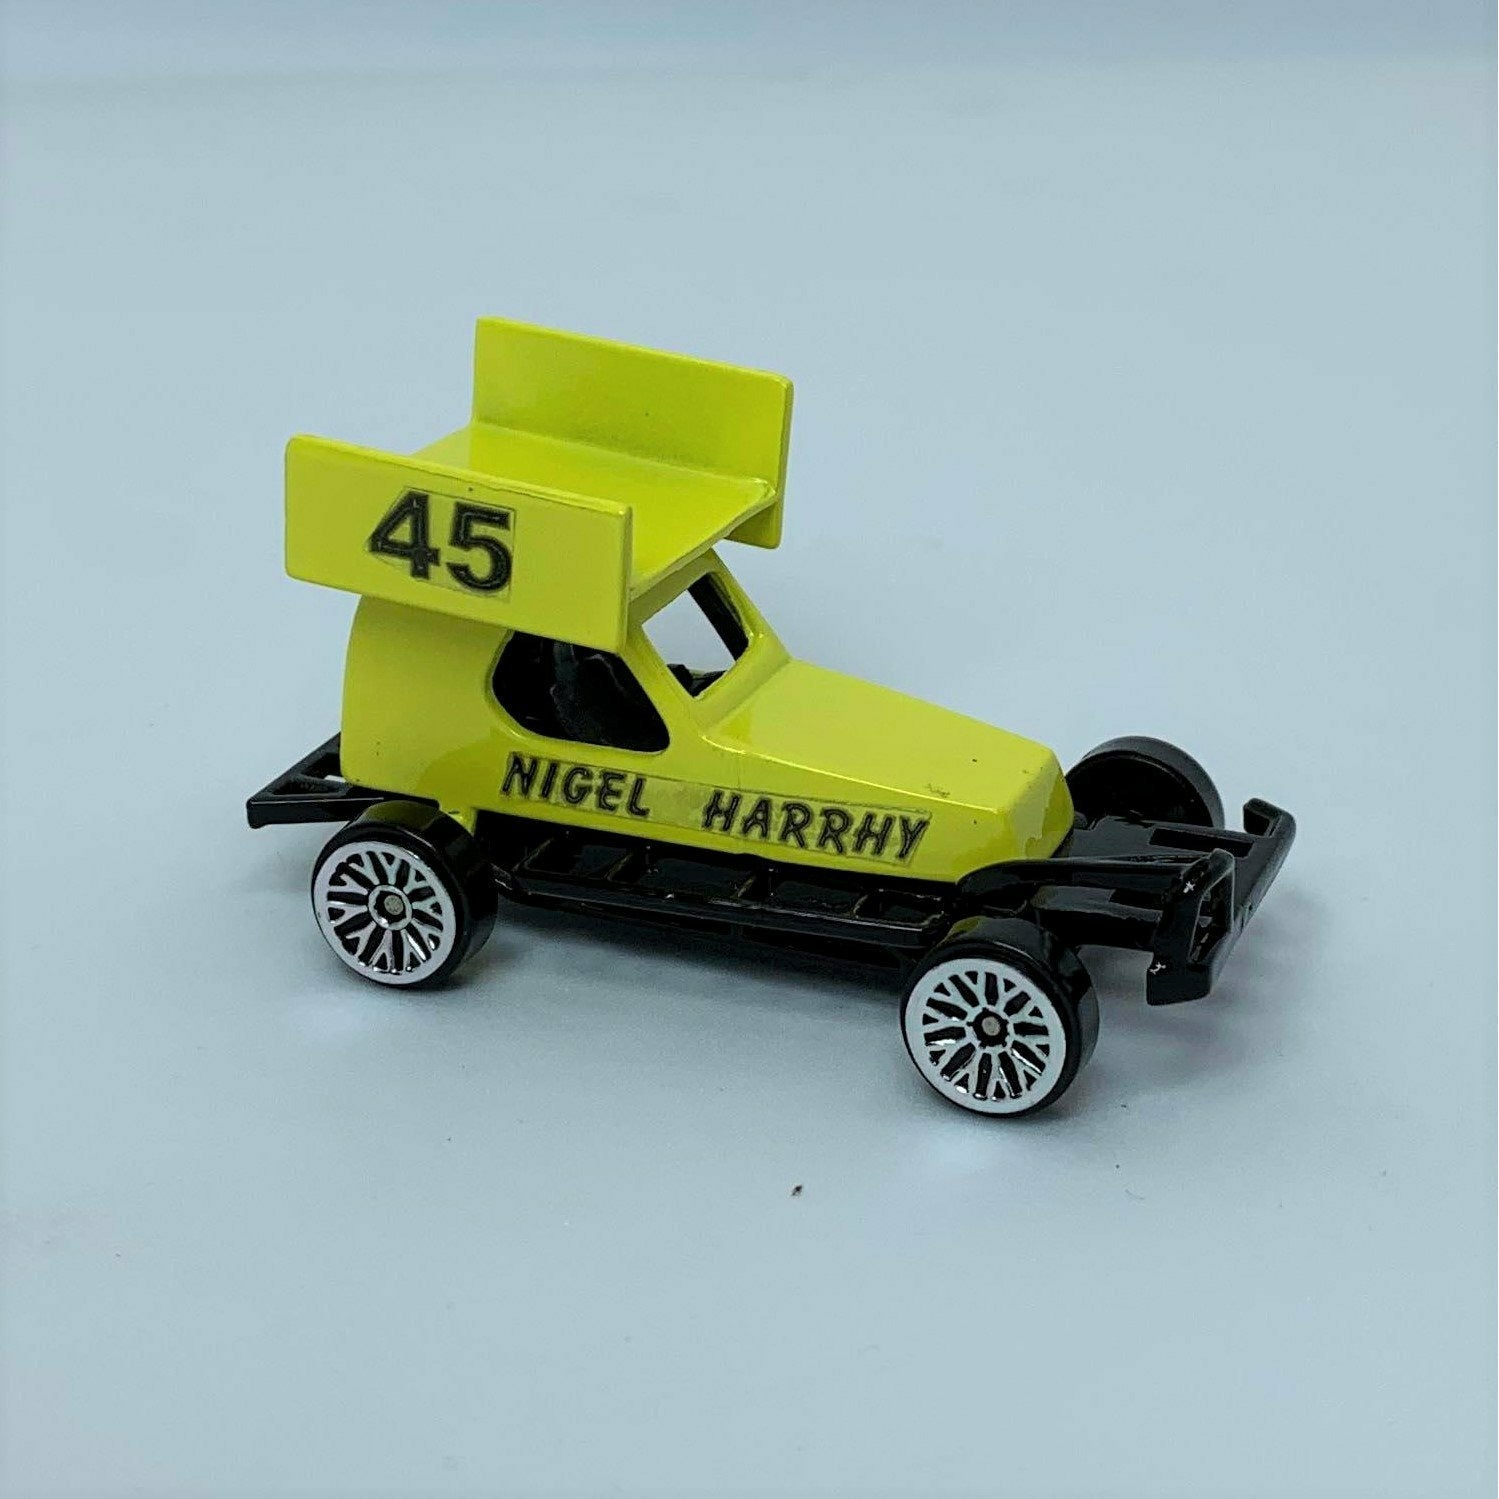 #45 Nigel Harrhy - Cars - Stock Car & Banger Toy Tracks